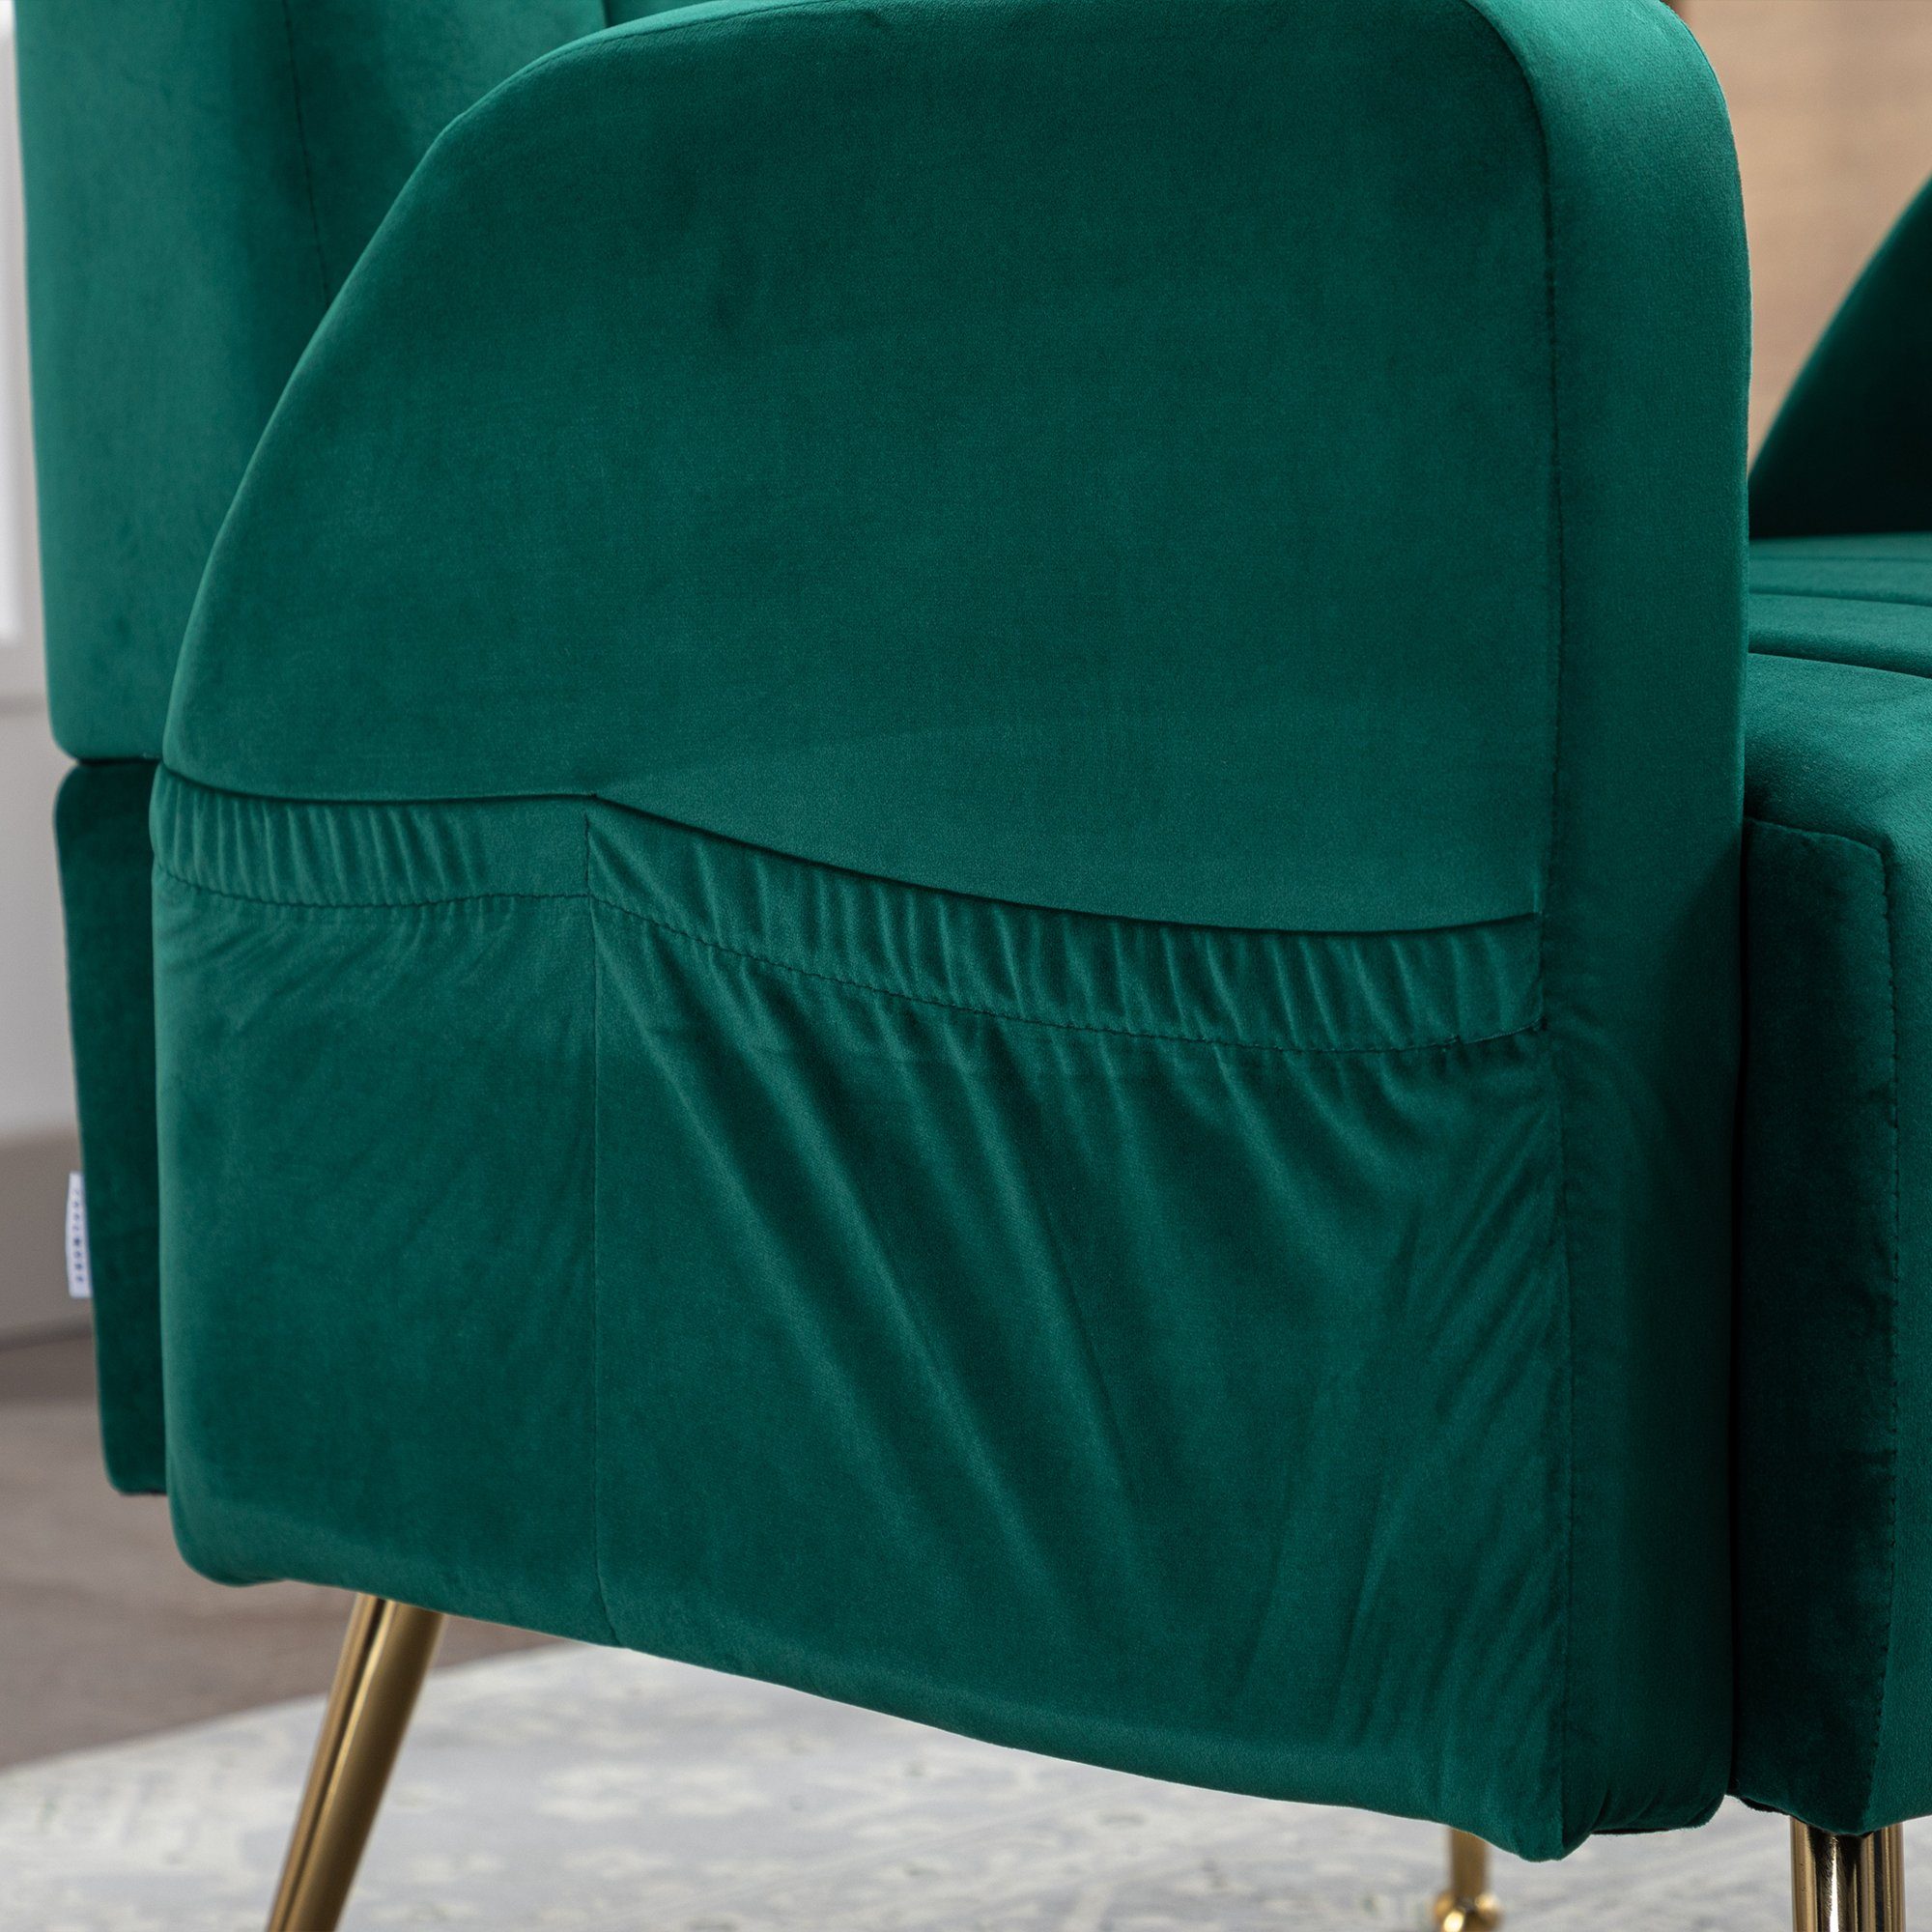 Odikalo Grün Freizeit Stuhl Einzelsofa Akzent gepolstert Loungesessel mehrfarbig Füßen goldene